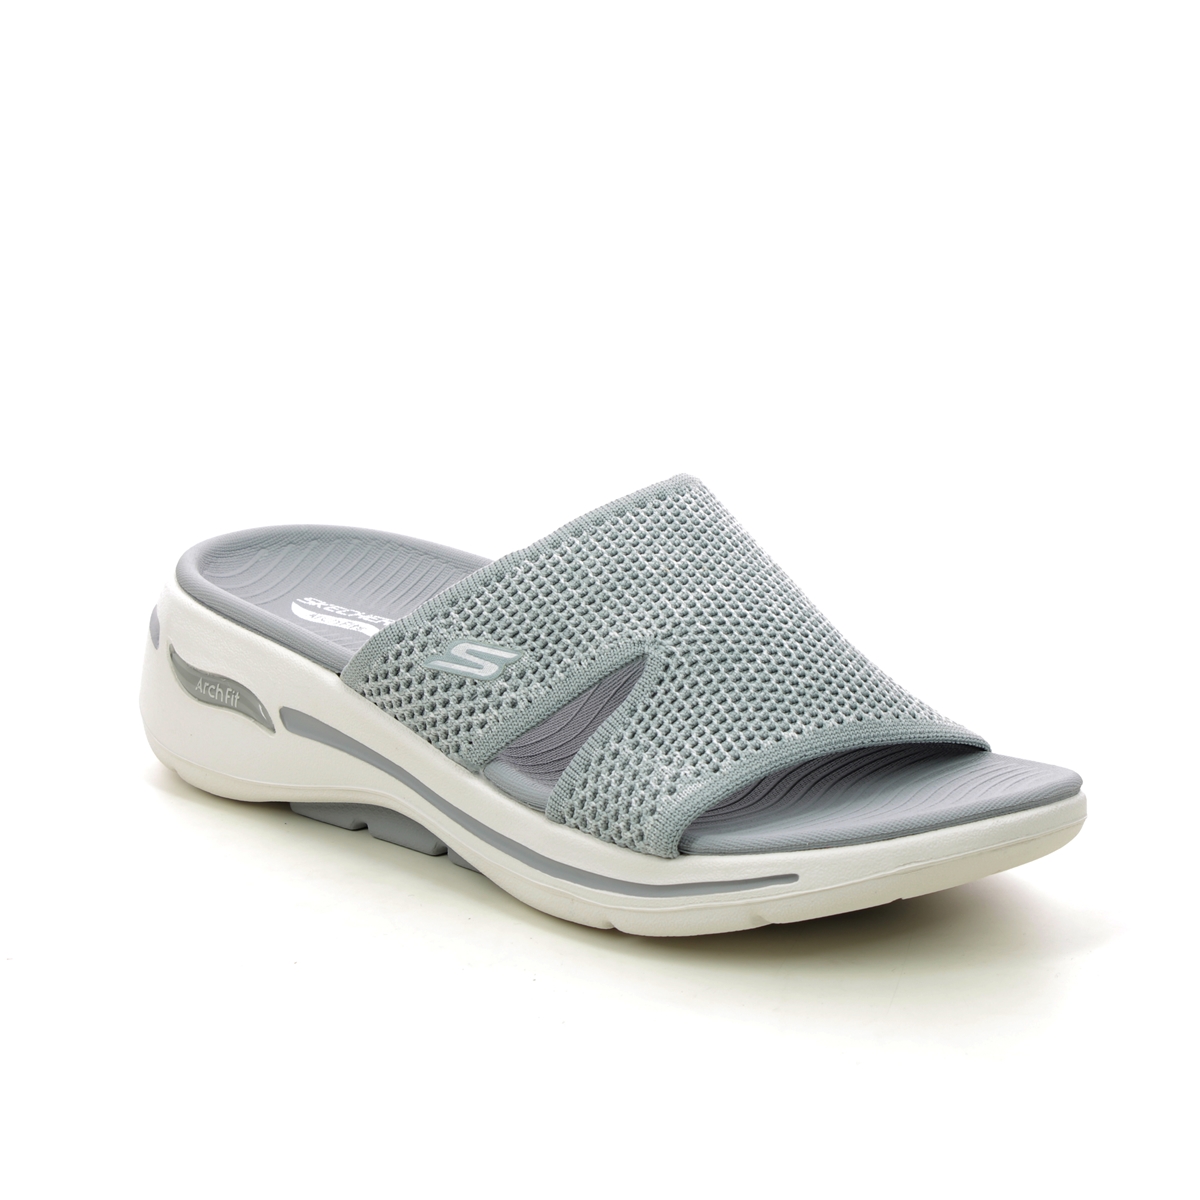 Skechers Arch Fit Joyful GRY Grey Womens Slide Sandals 140274 in a Plain Textile in Size 6